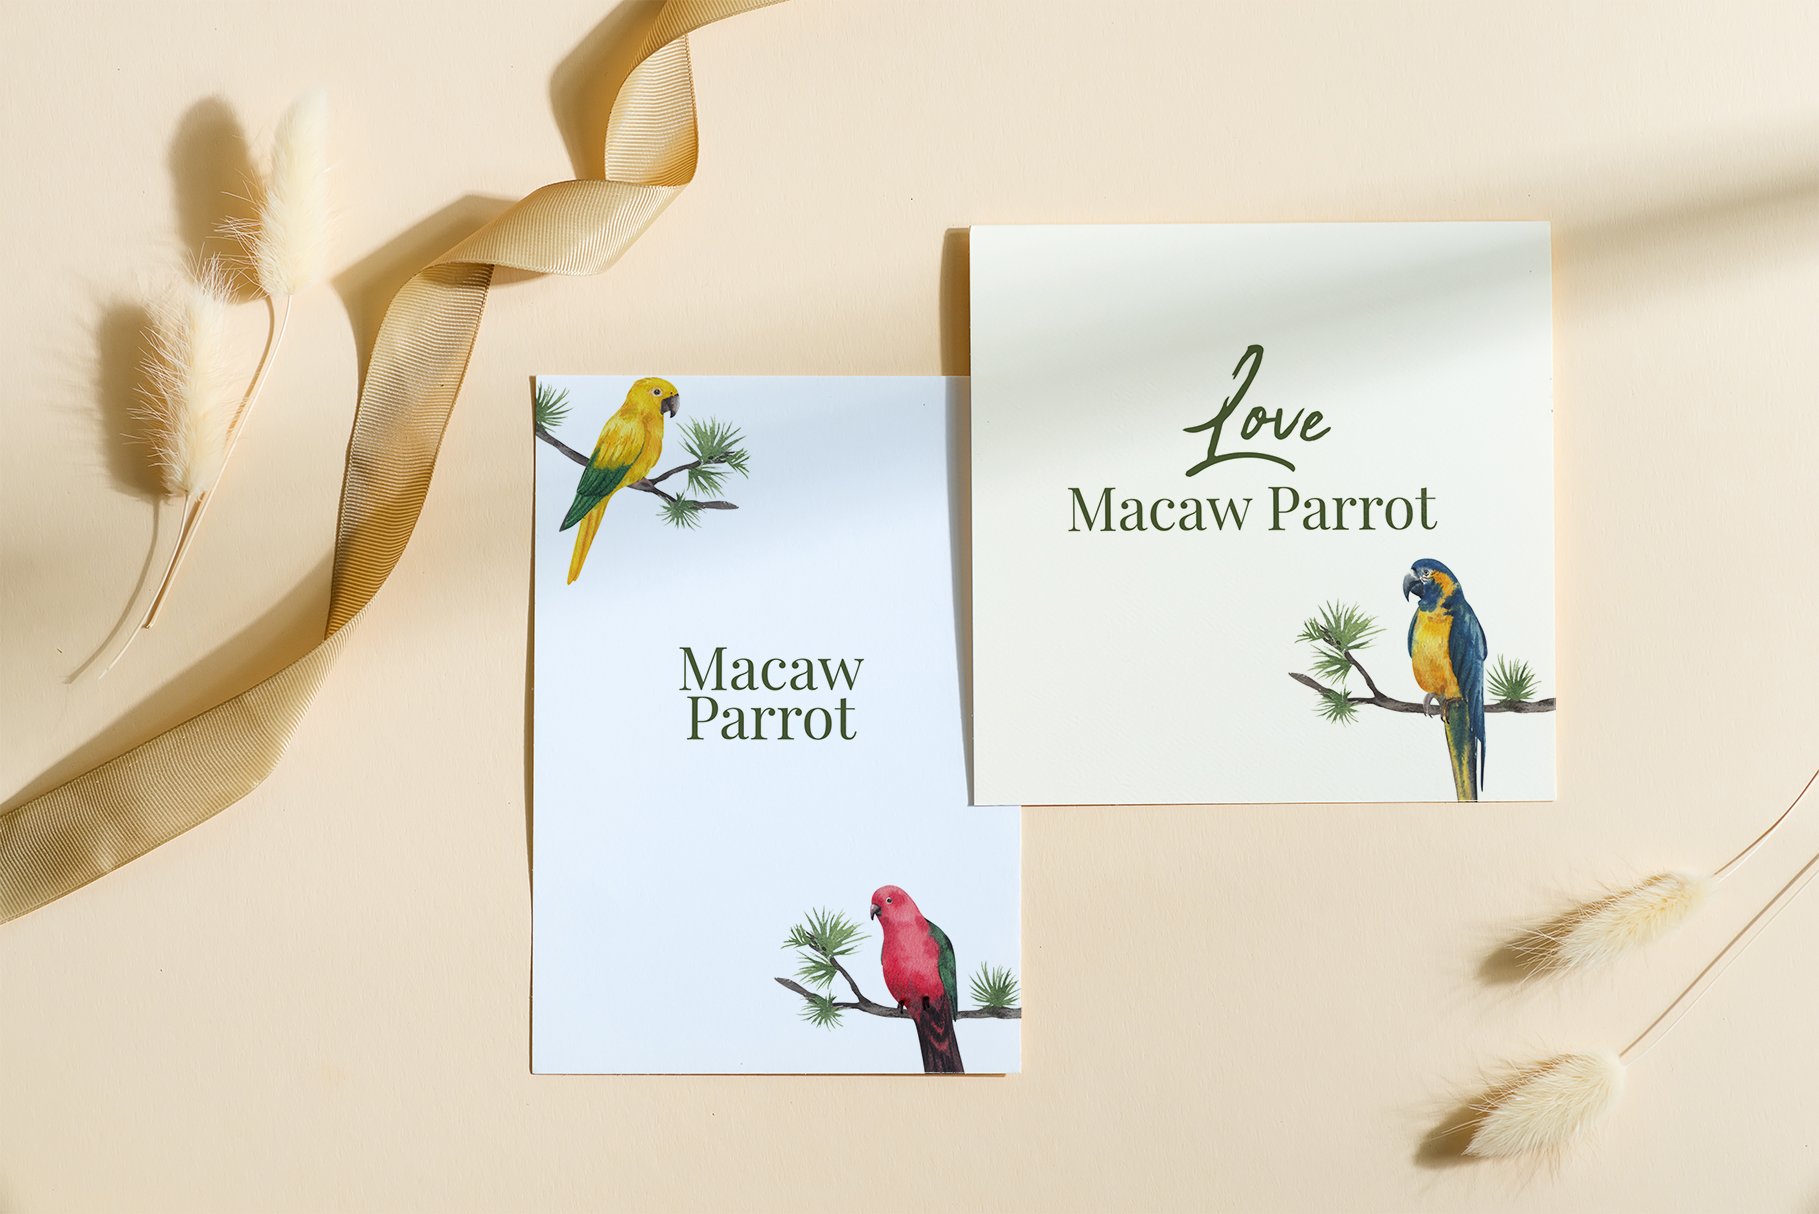 08 macaw parrot presentation mockup 02 676